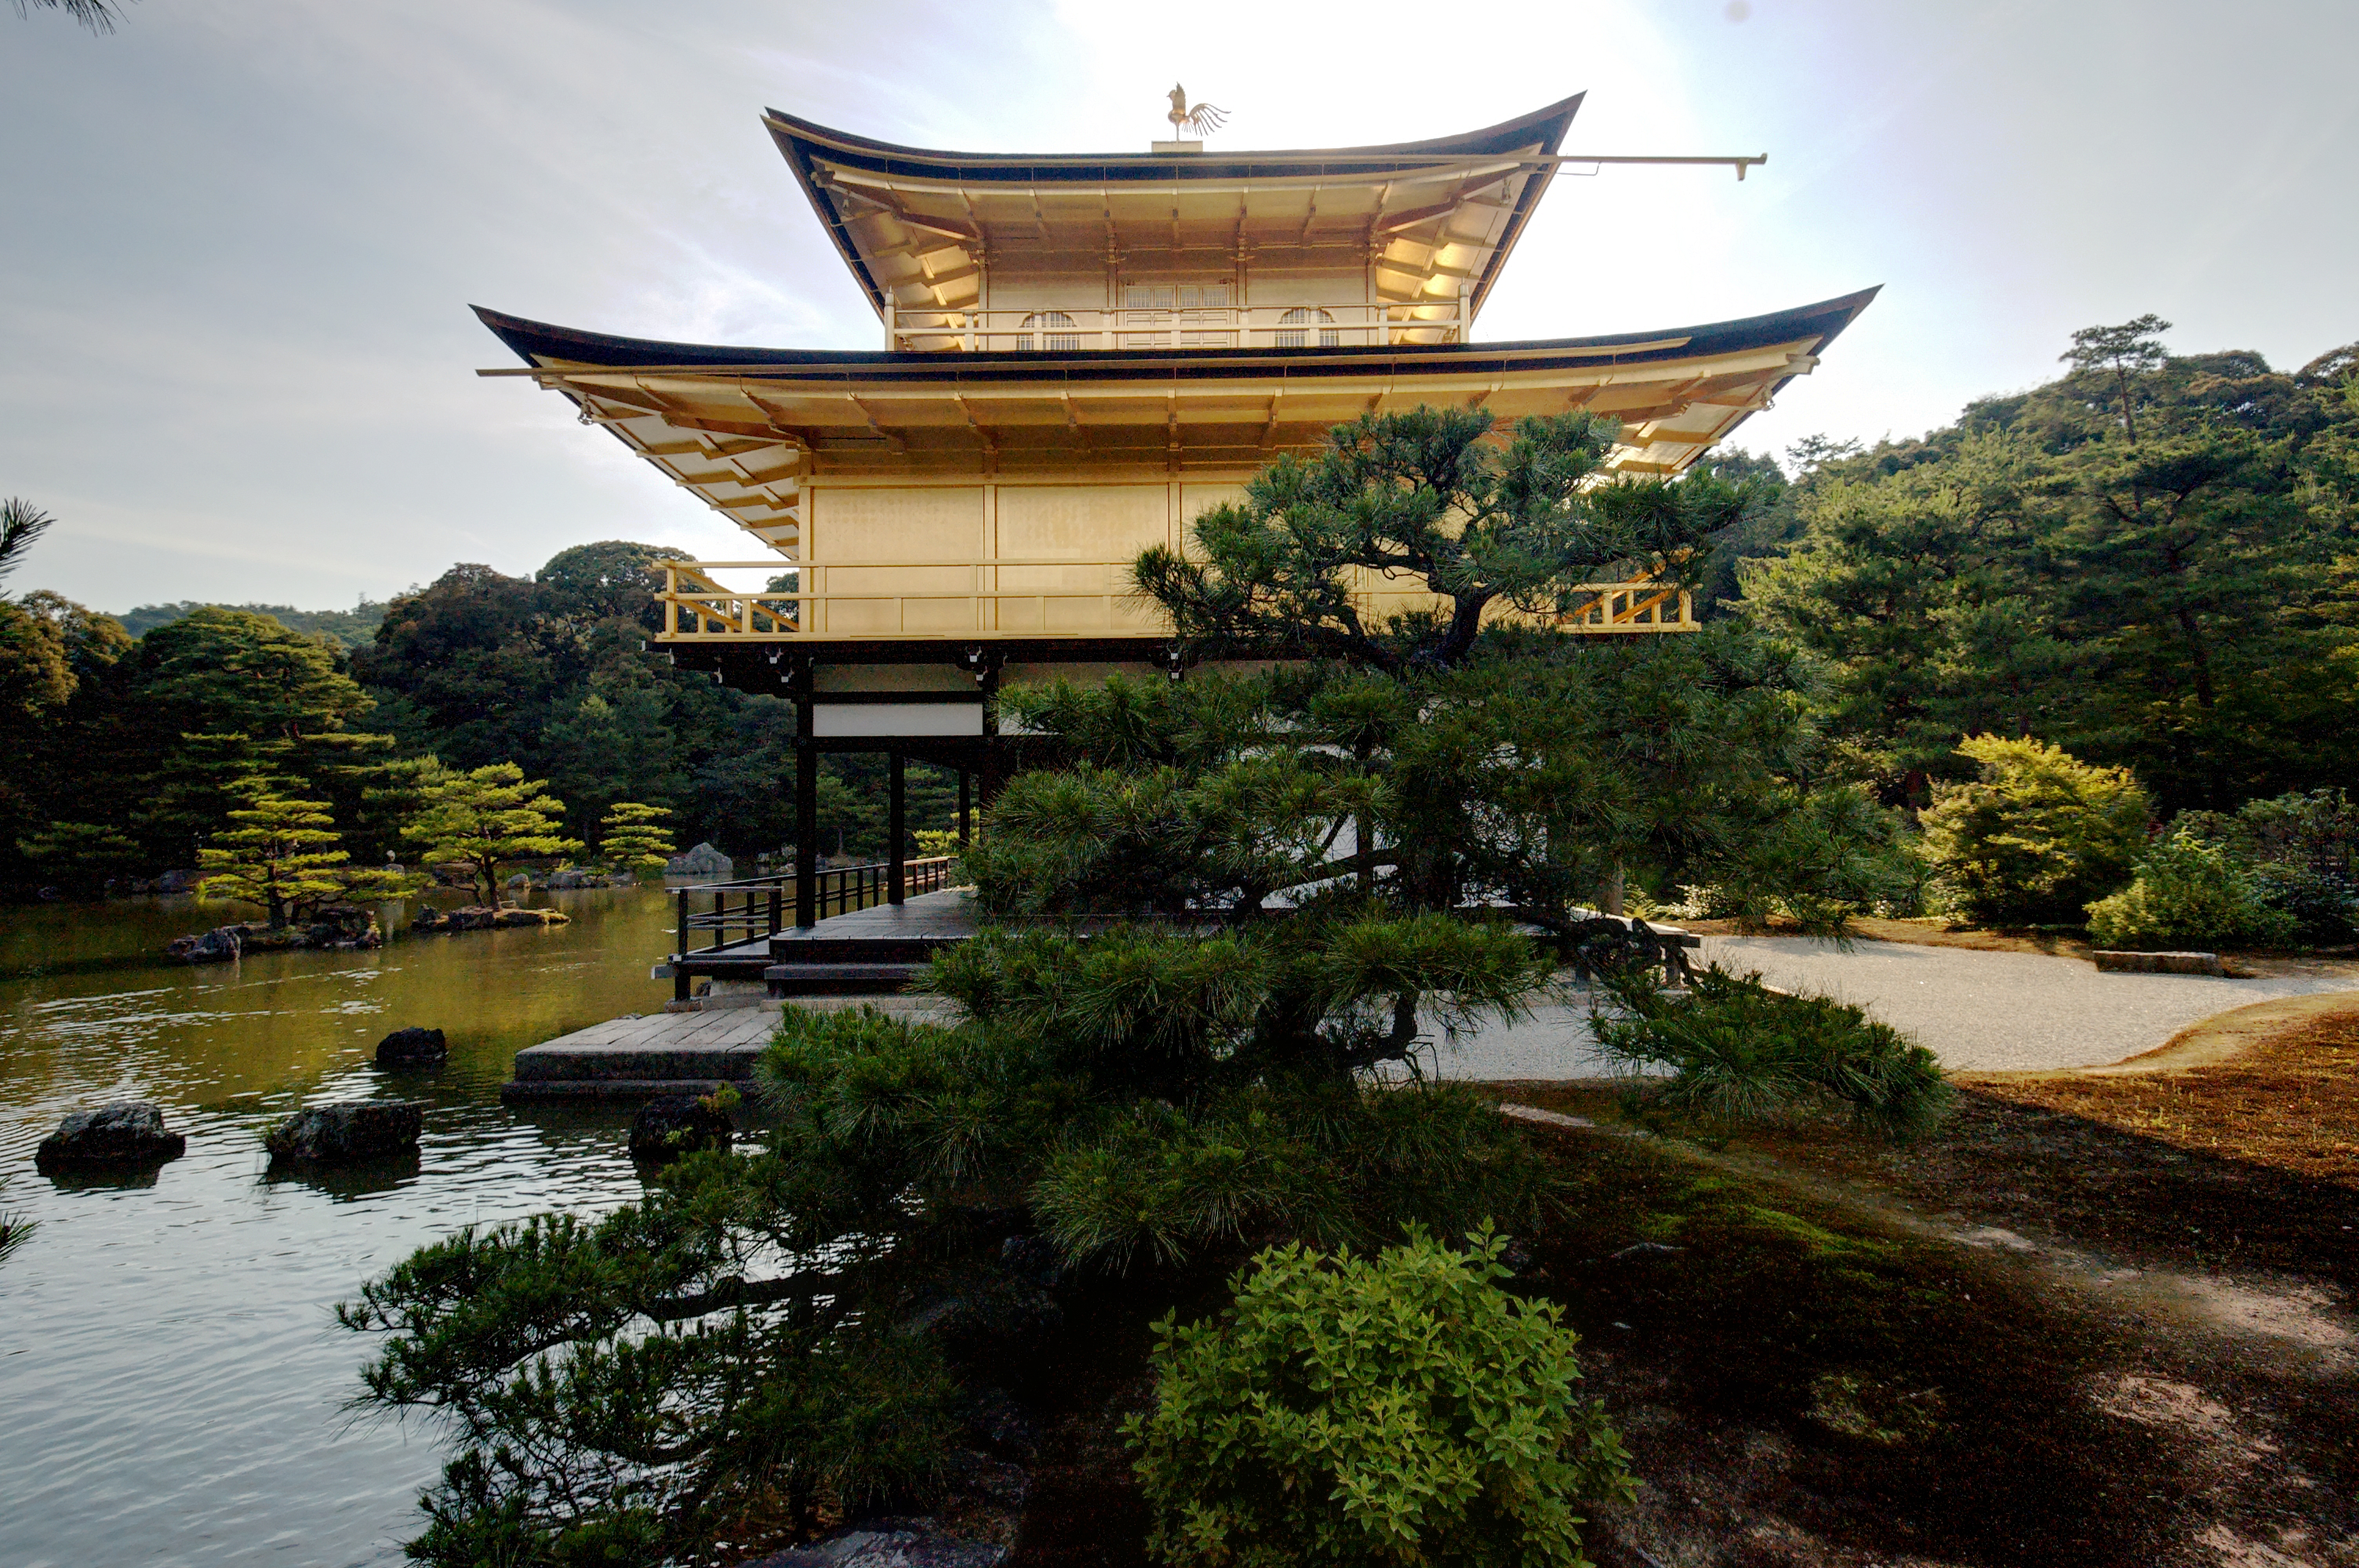 354241 descargar imagen zen, religioso, kinkaku ji, japón, kioto, templo, templos: fondos de pantalla y protectores de pantalla gratis